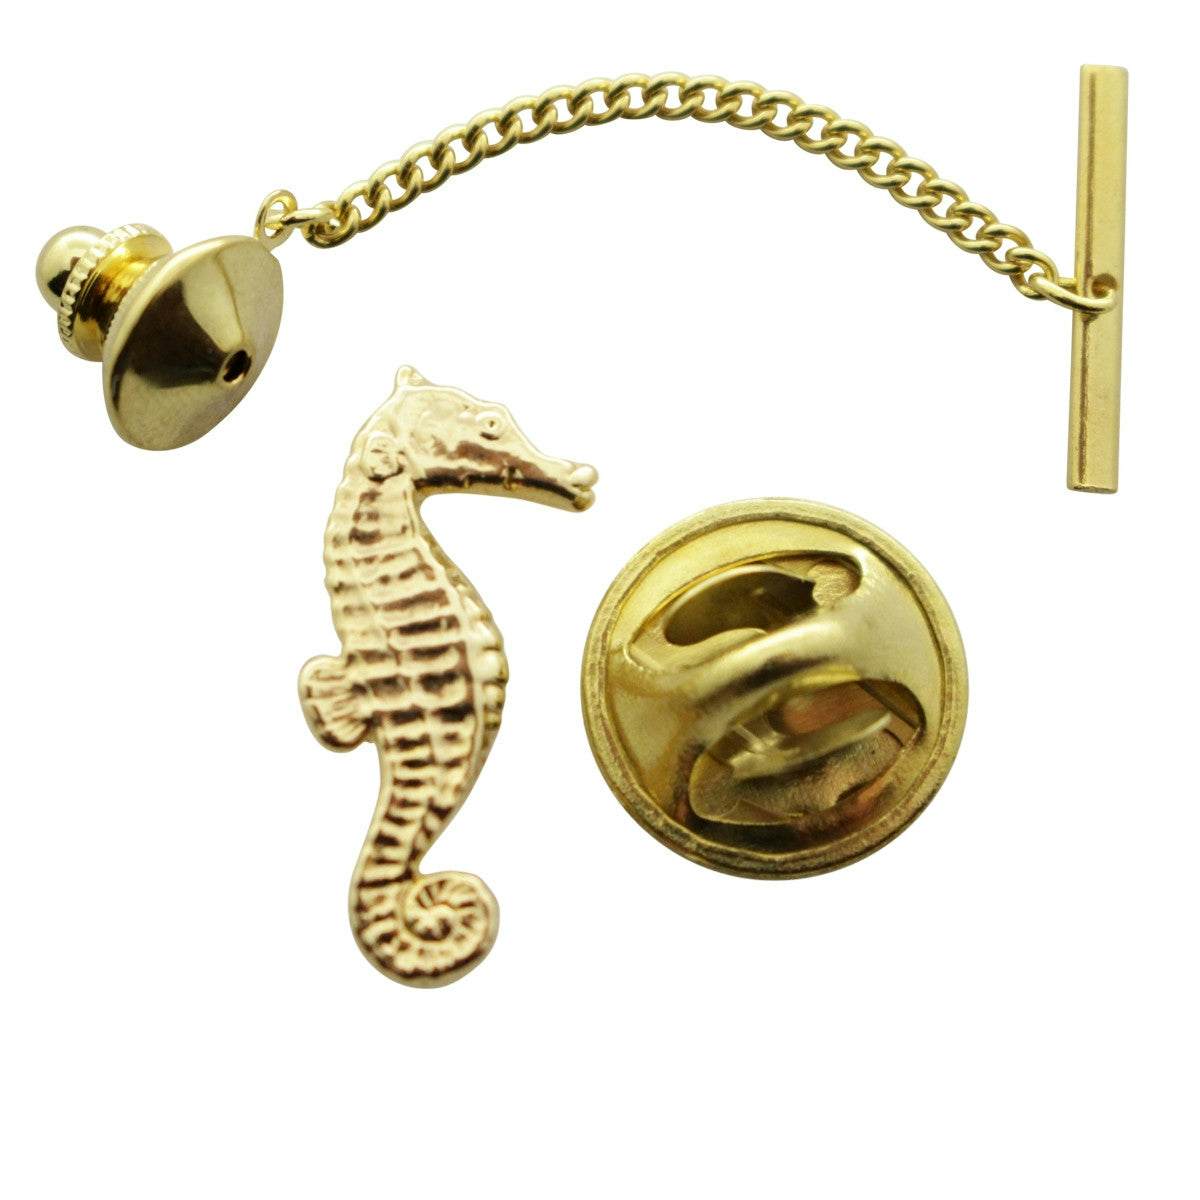 Seahorse Tie Tack ~ 24K Gold ~ Tie Tack or Pin ~ Sarahs Treats & Treasures 